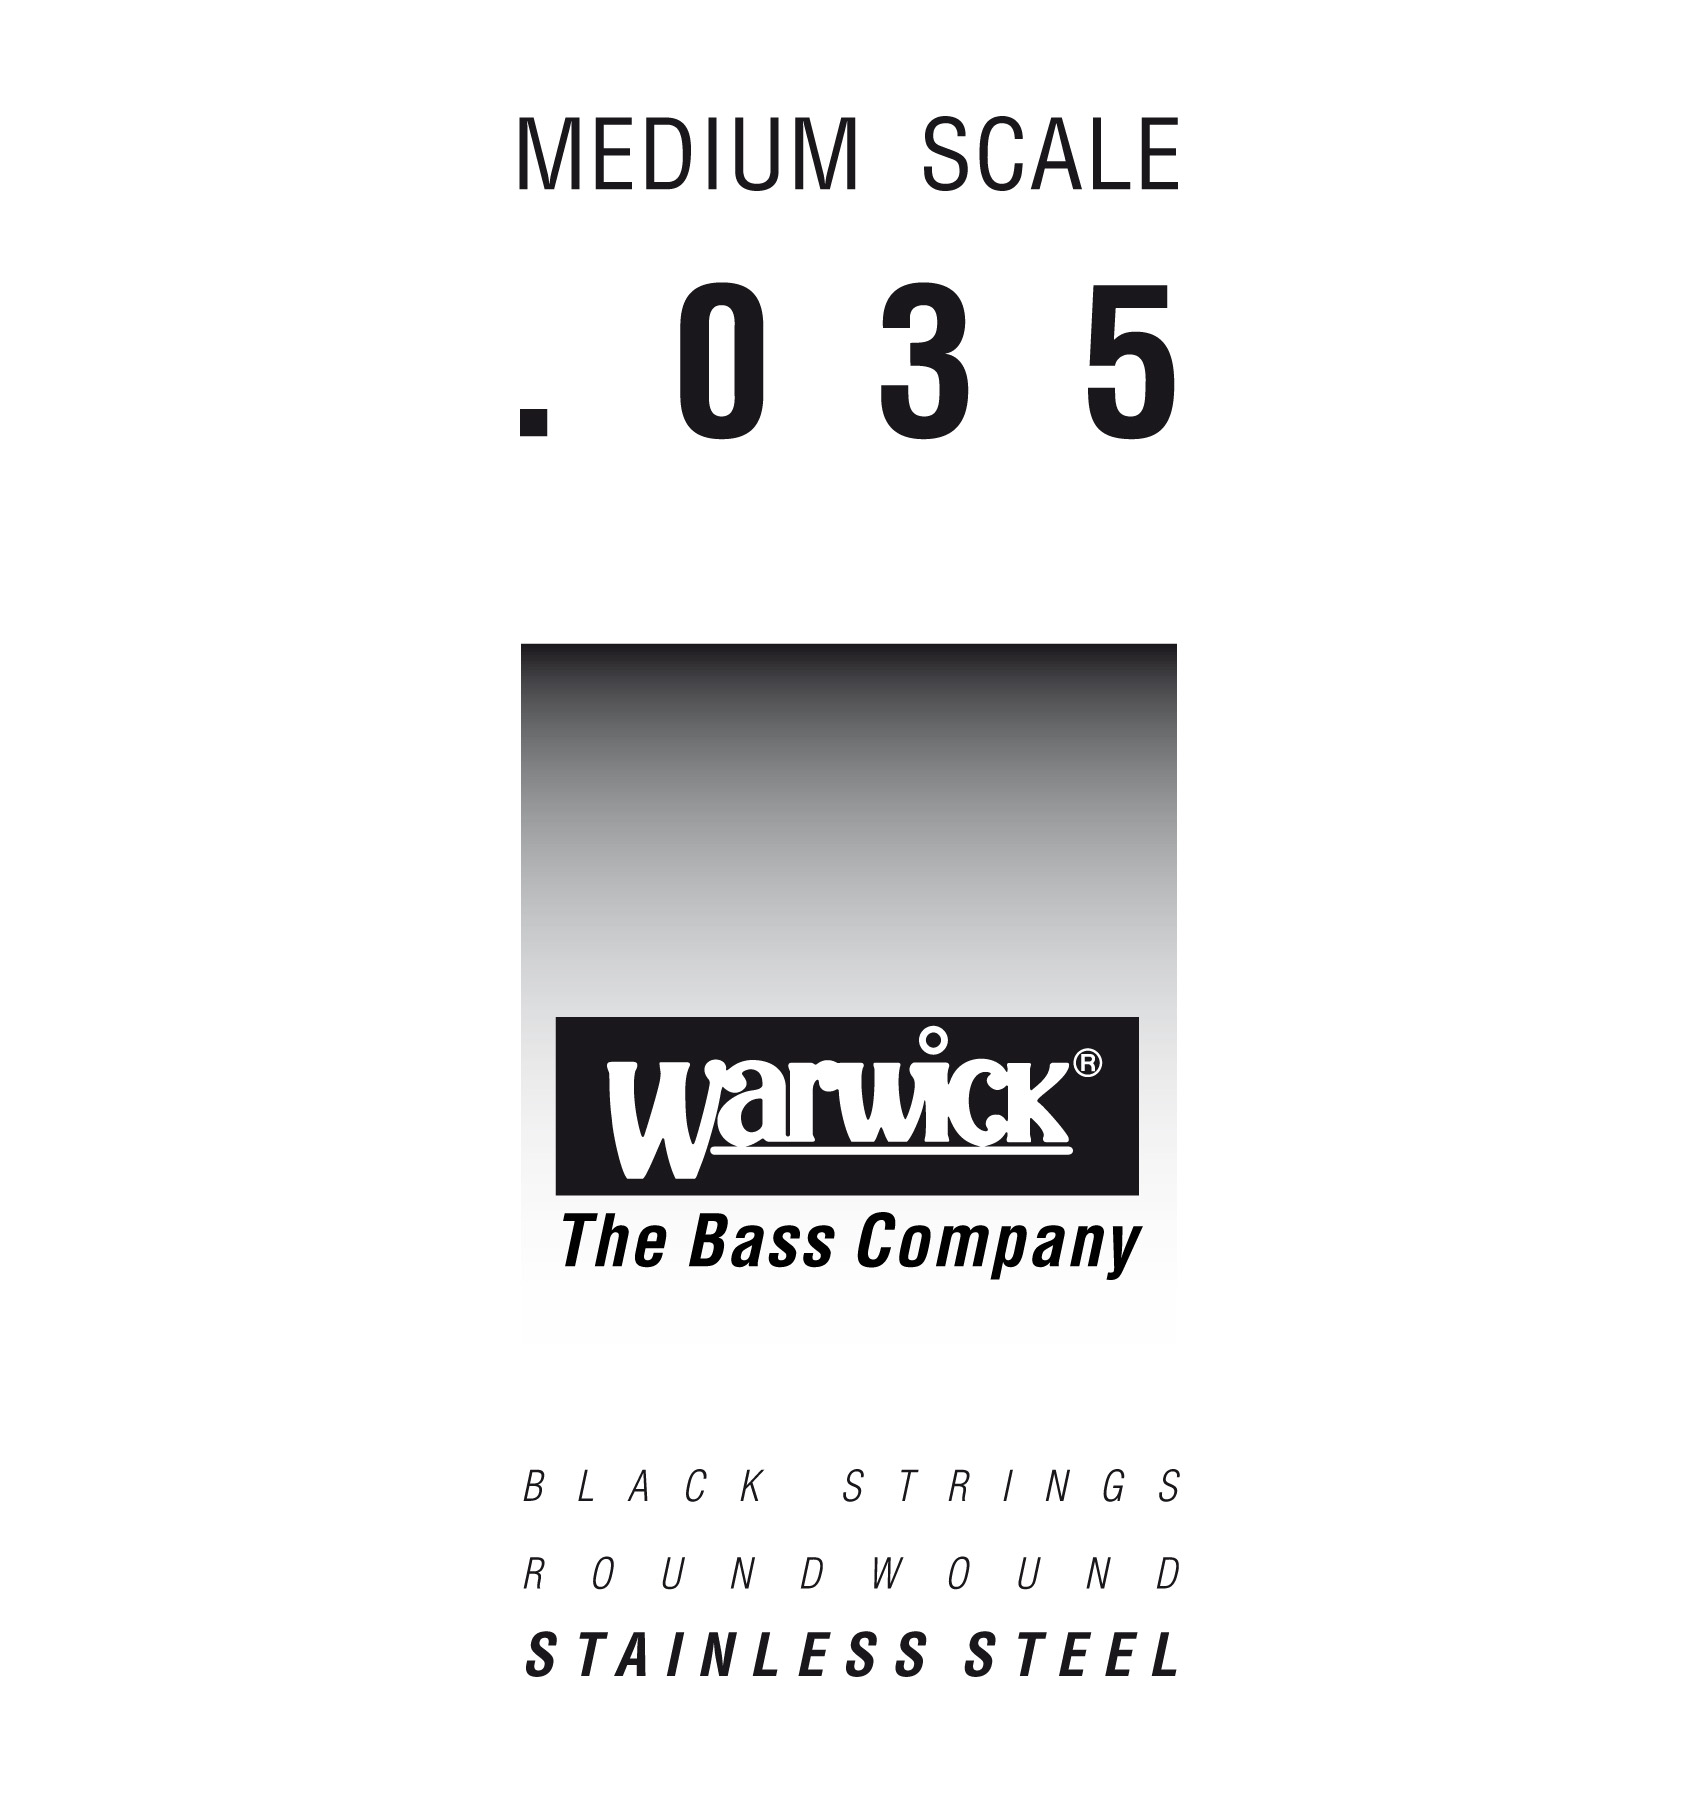 Warwick Black Label Bass Strings, Stainless Steel - Bass Single String, .035", Medium Scale